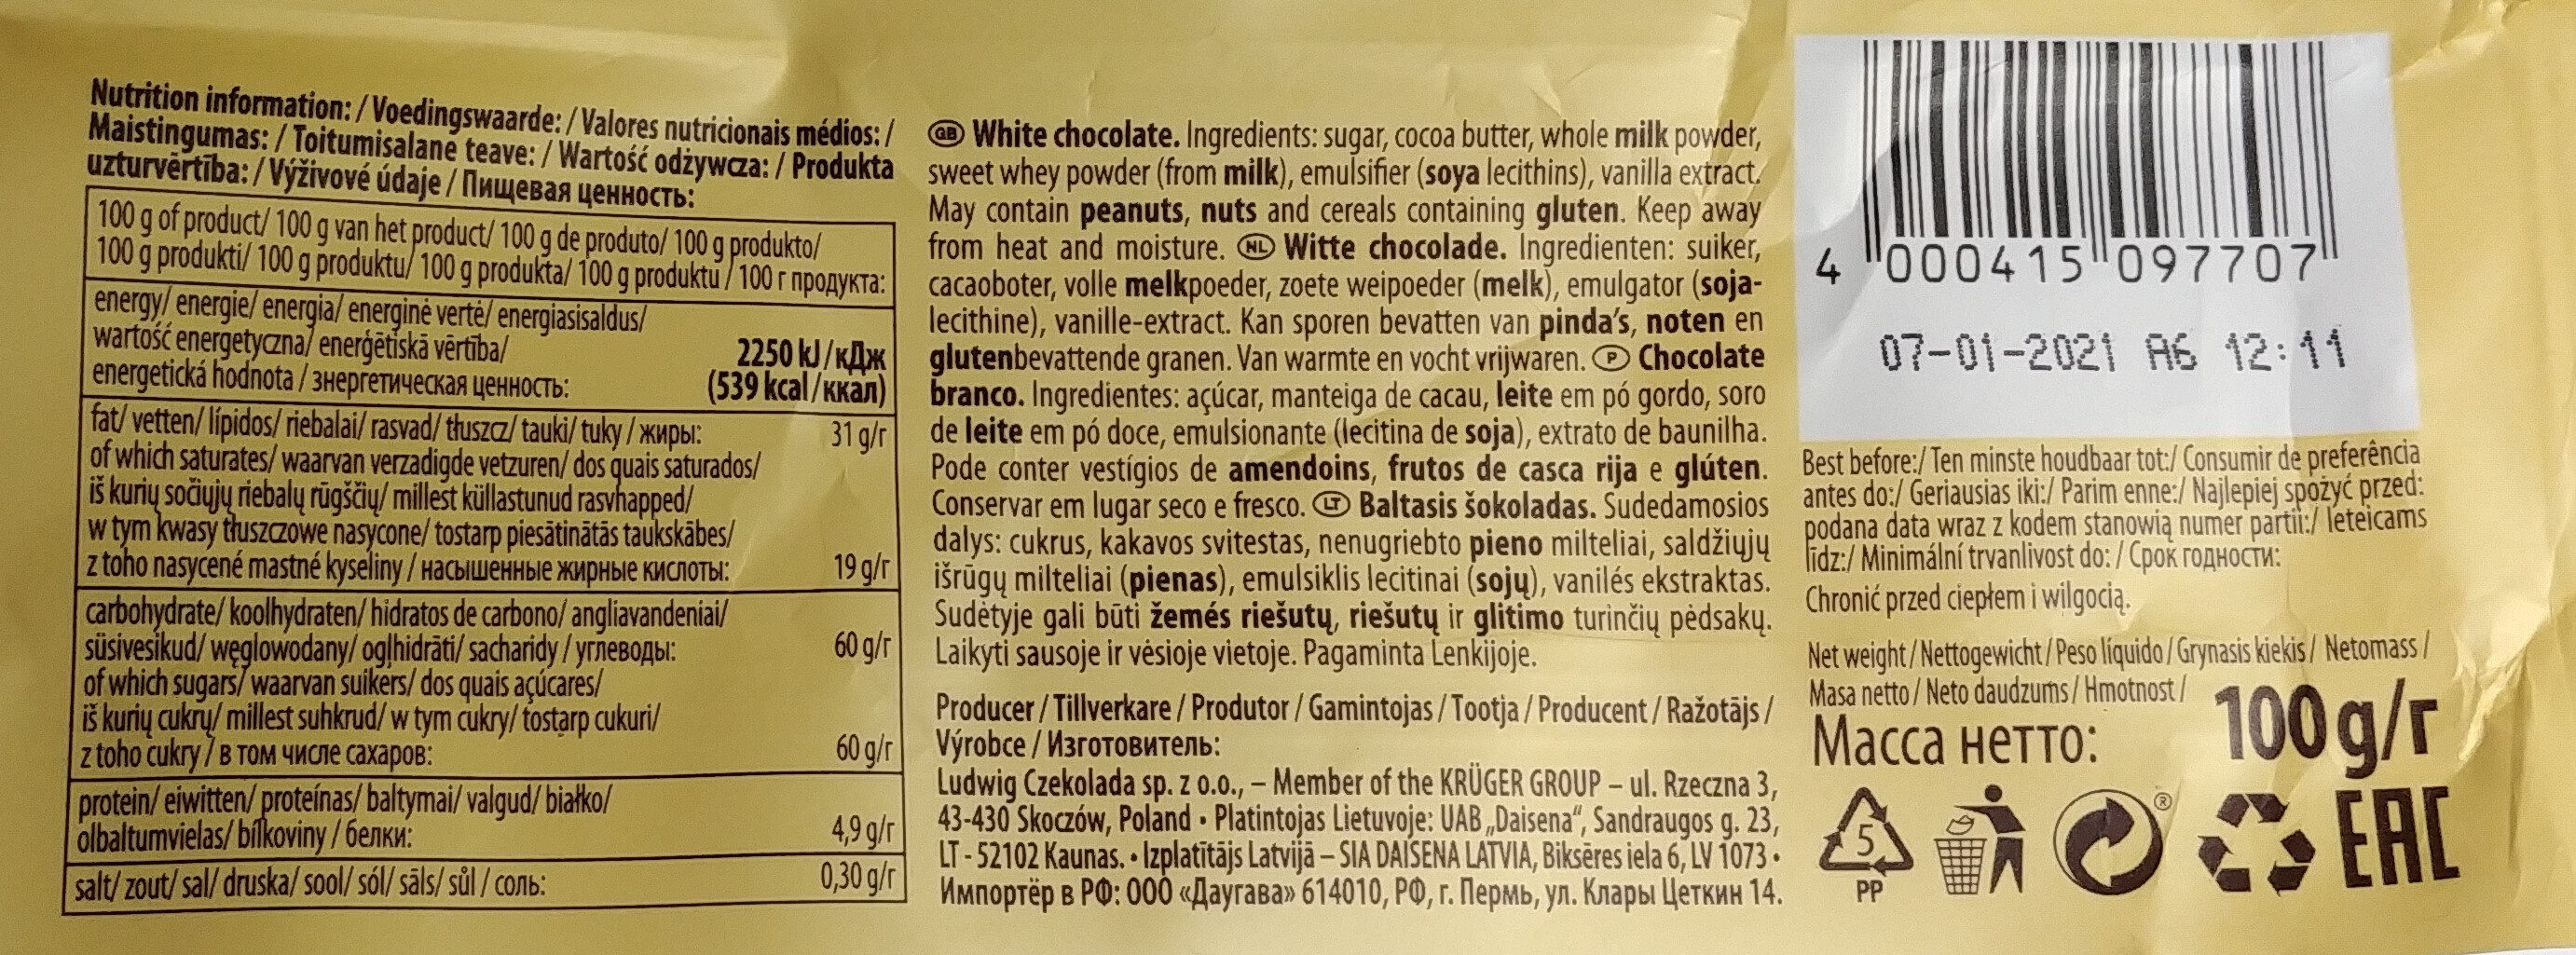 Biała czekolada - Voedingswaarden - pl